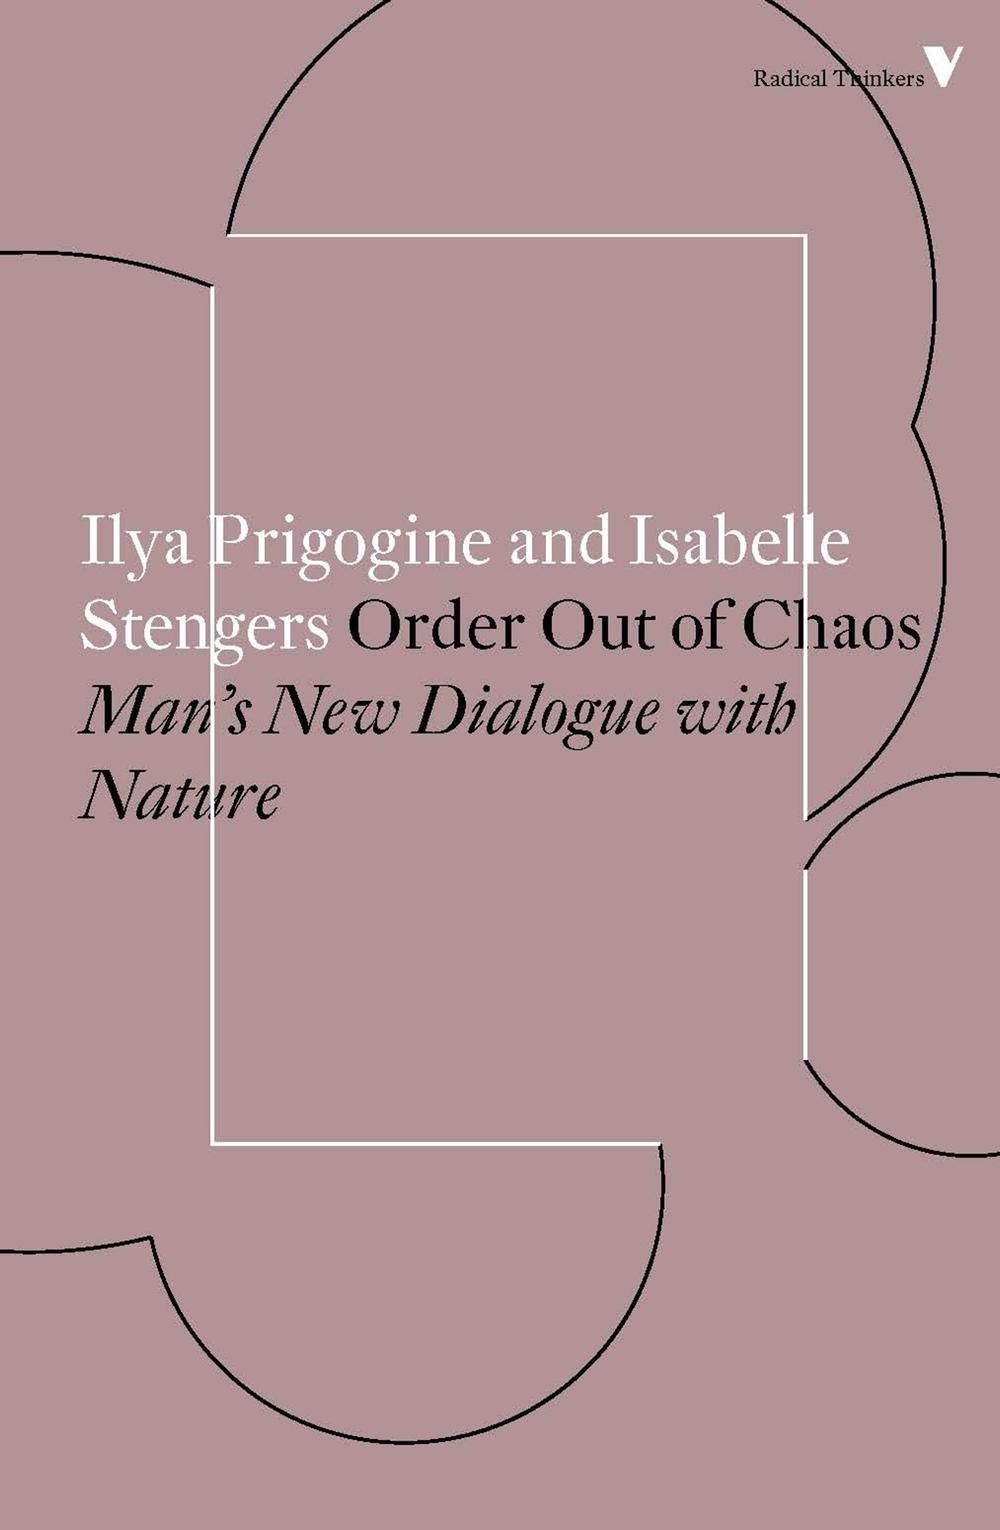 Order Out of Chaos - Ilya Prigogine